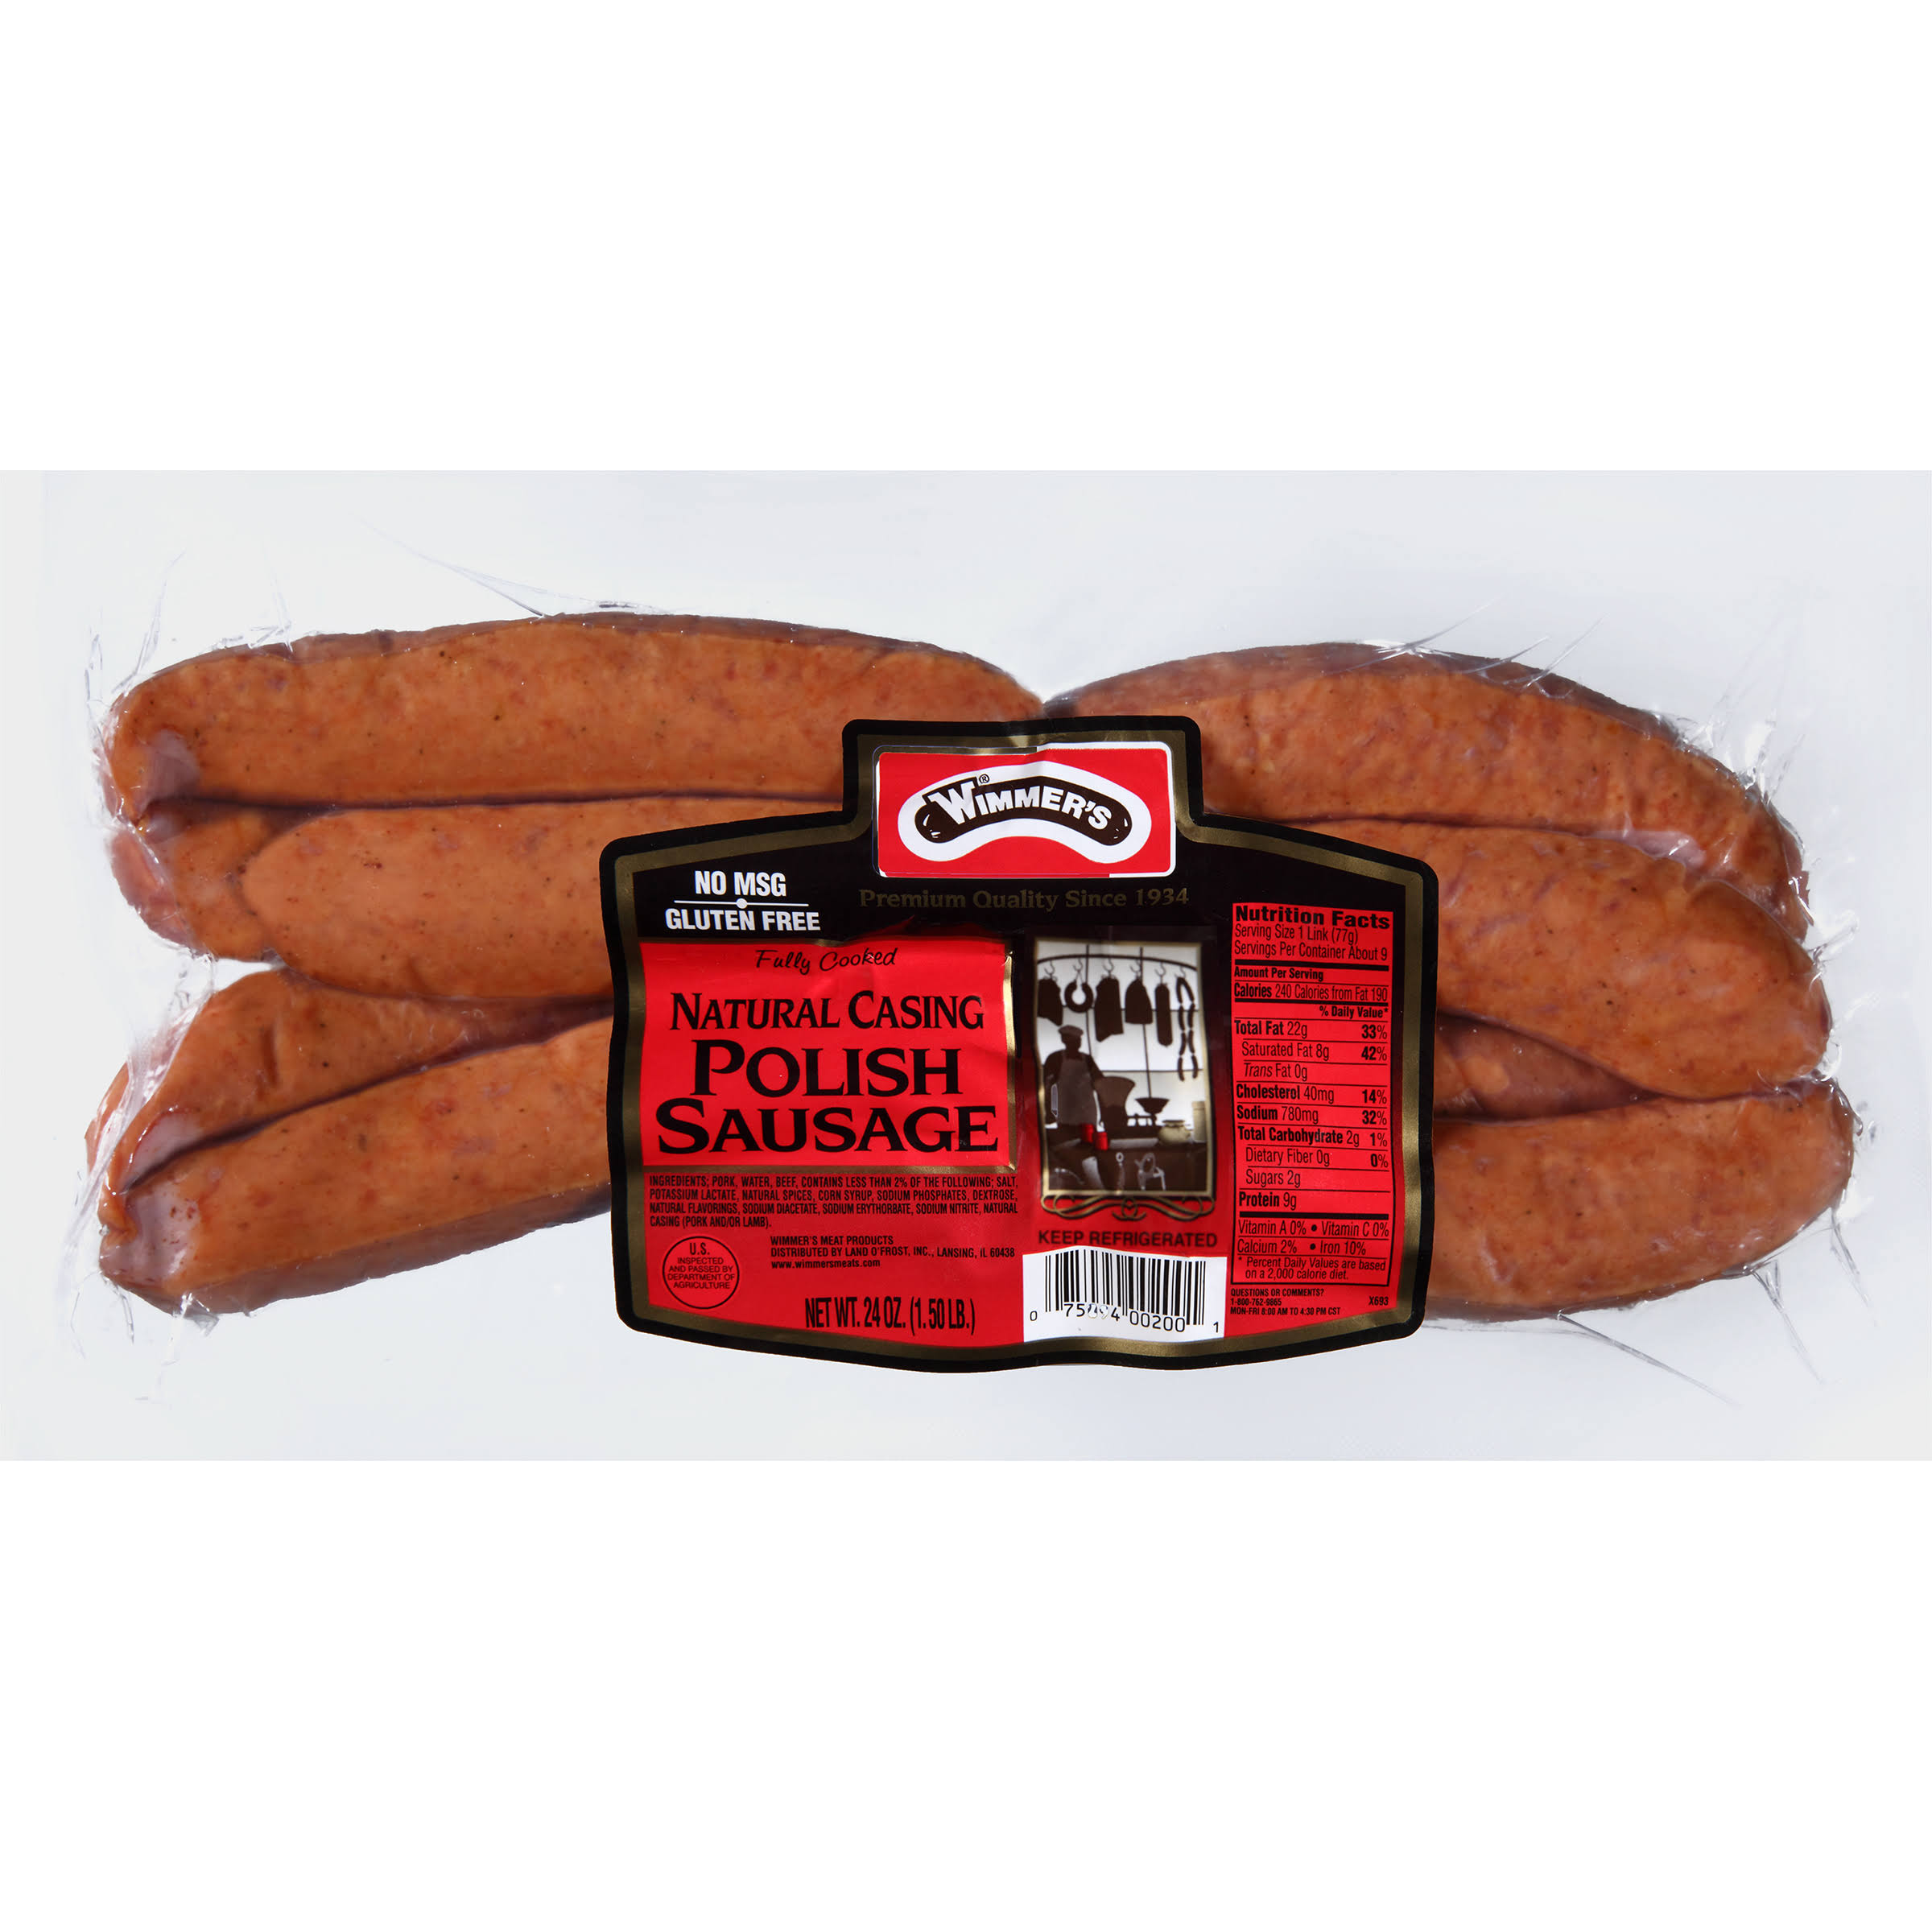 Wimmer's Natural Casing Polish Sausage - 24 oz